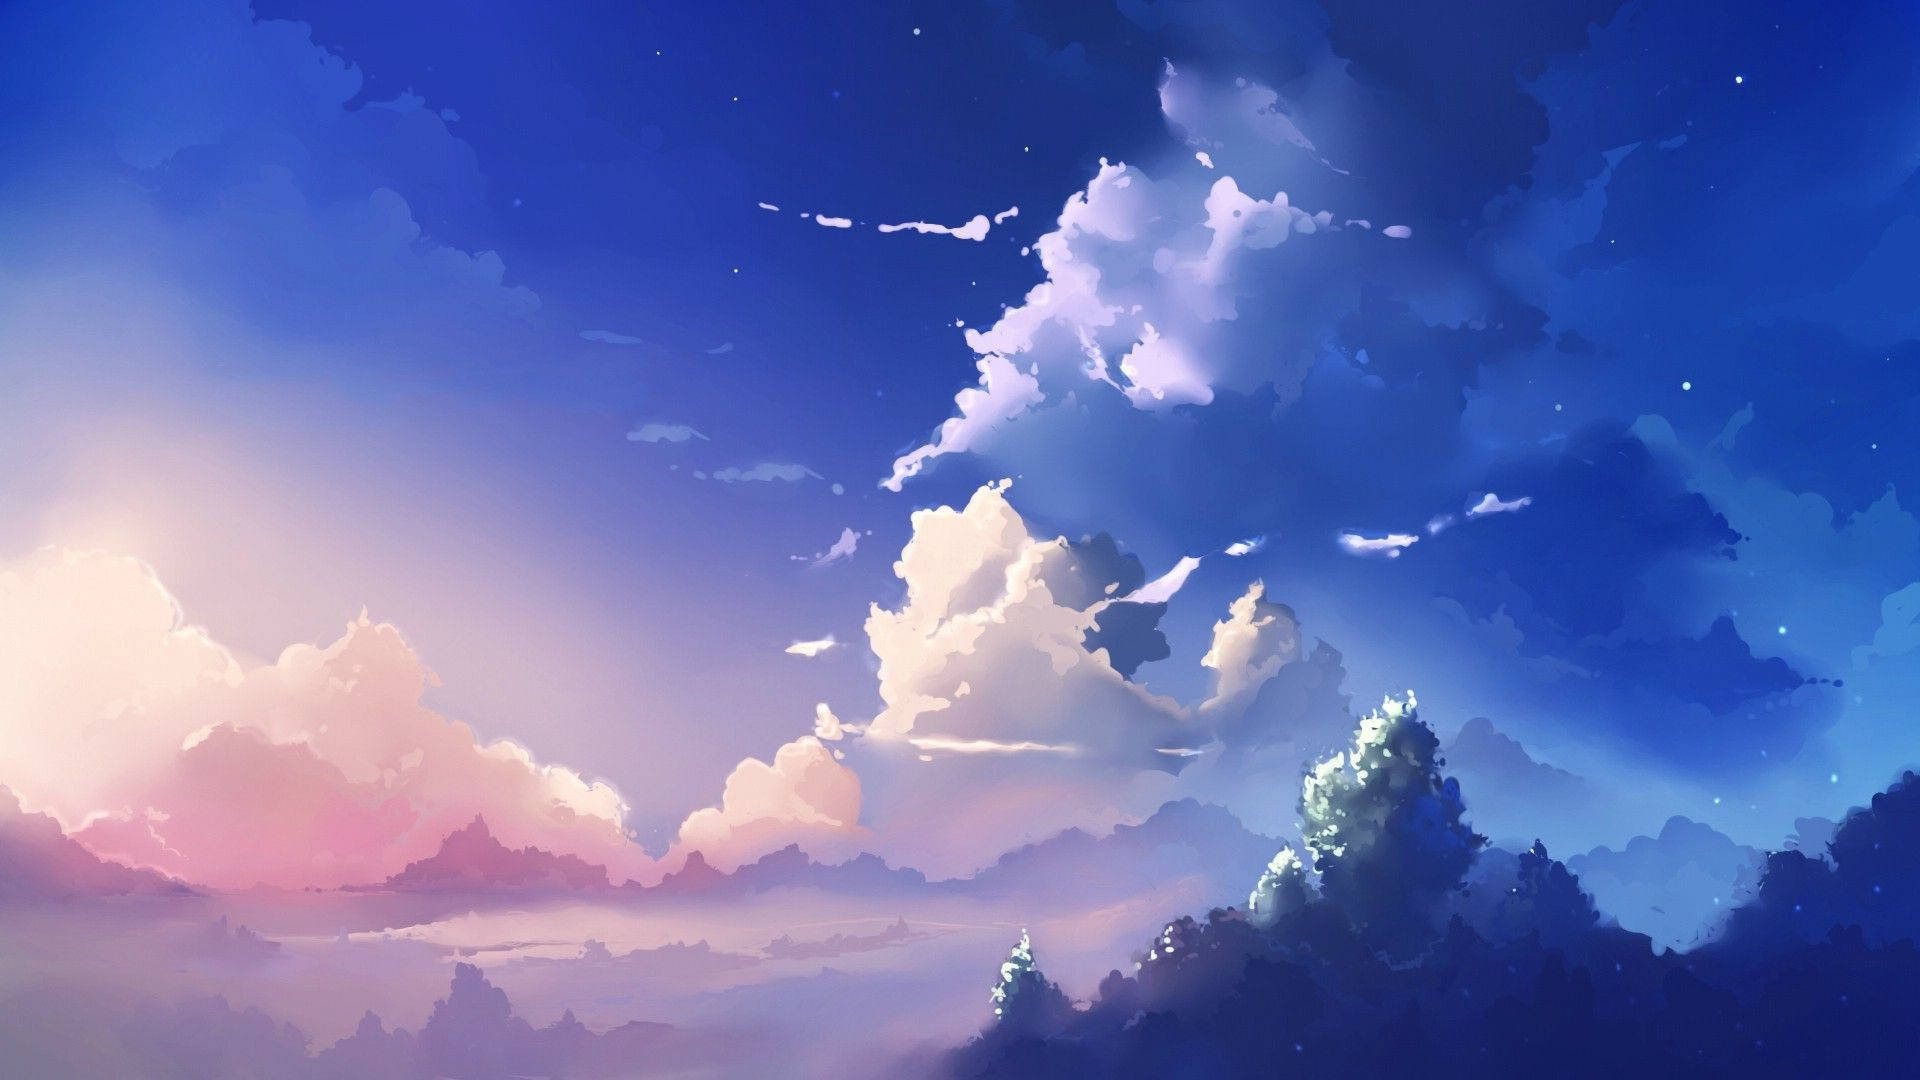 Deep Blue Sky Anime Landscape Wallpaper